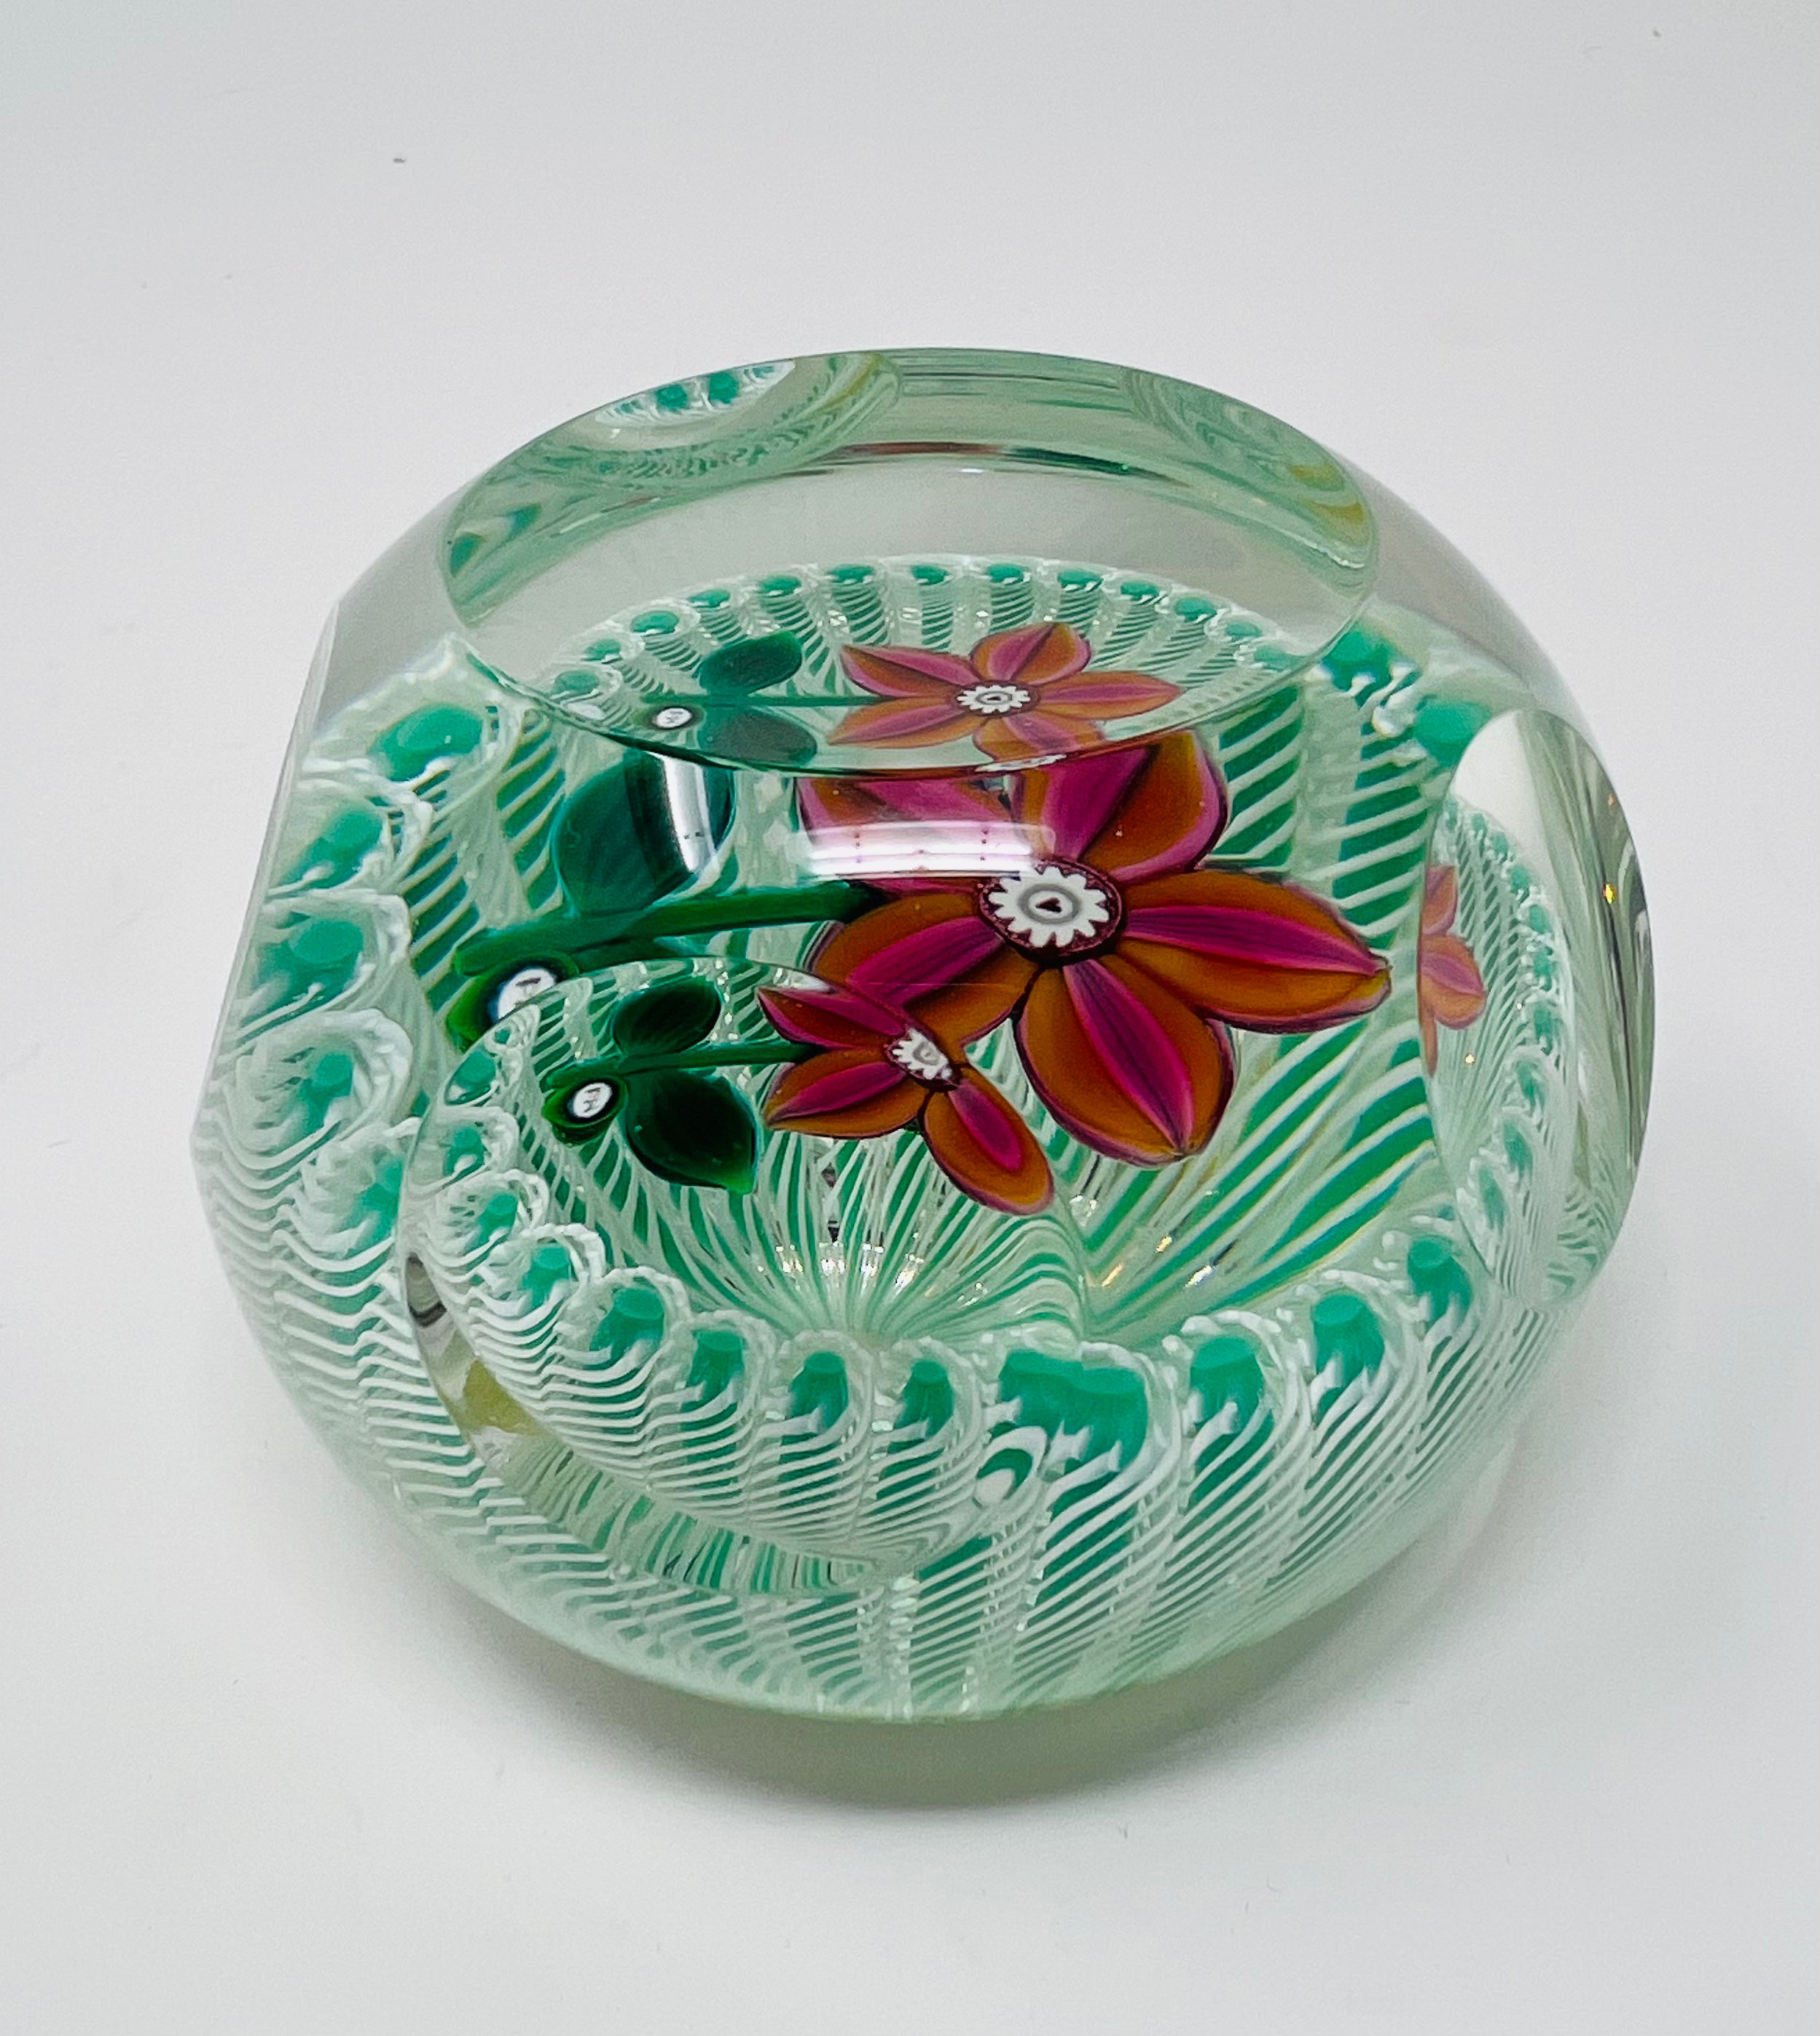 Peter Holmes Selkirk Glass 1996 Heart Flower Paperweight